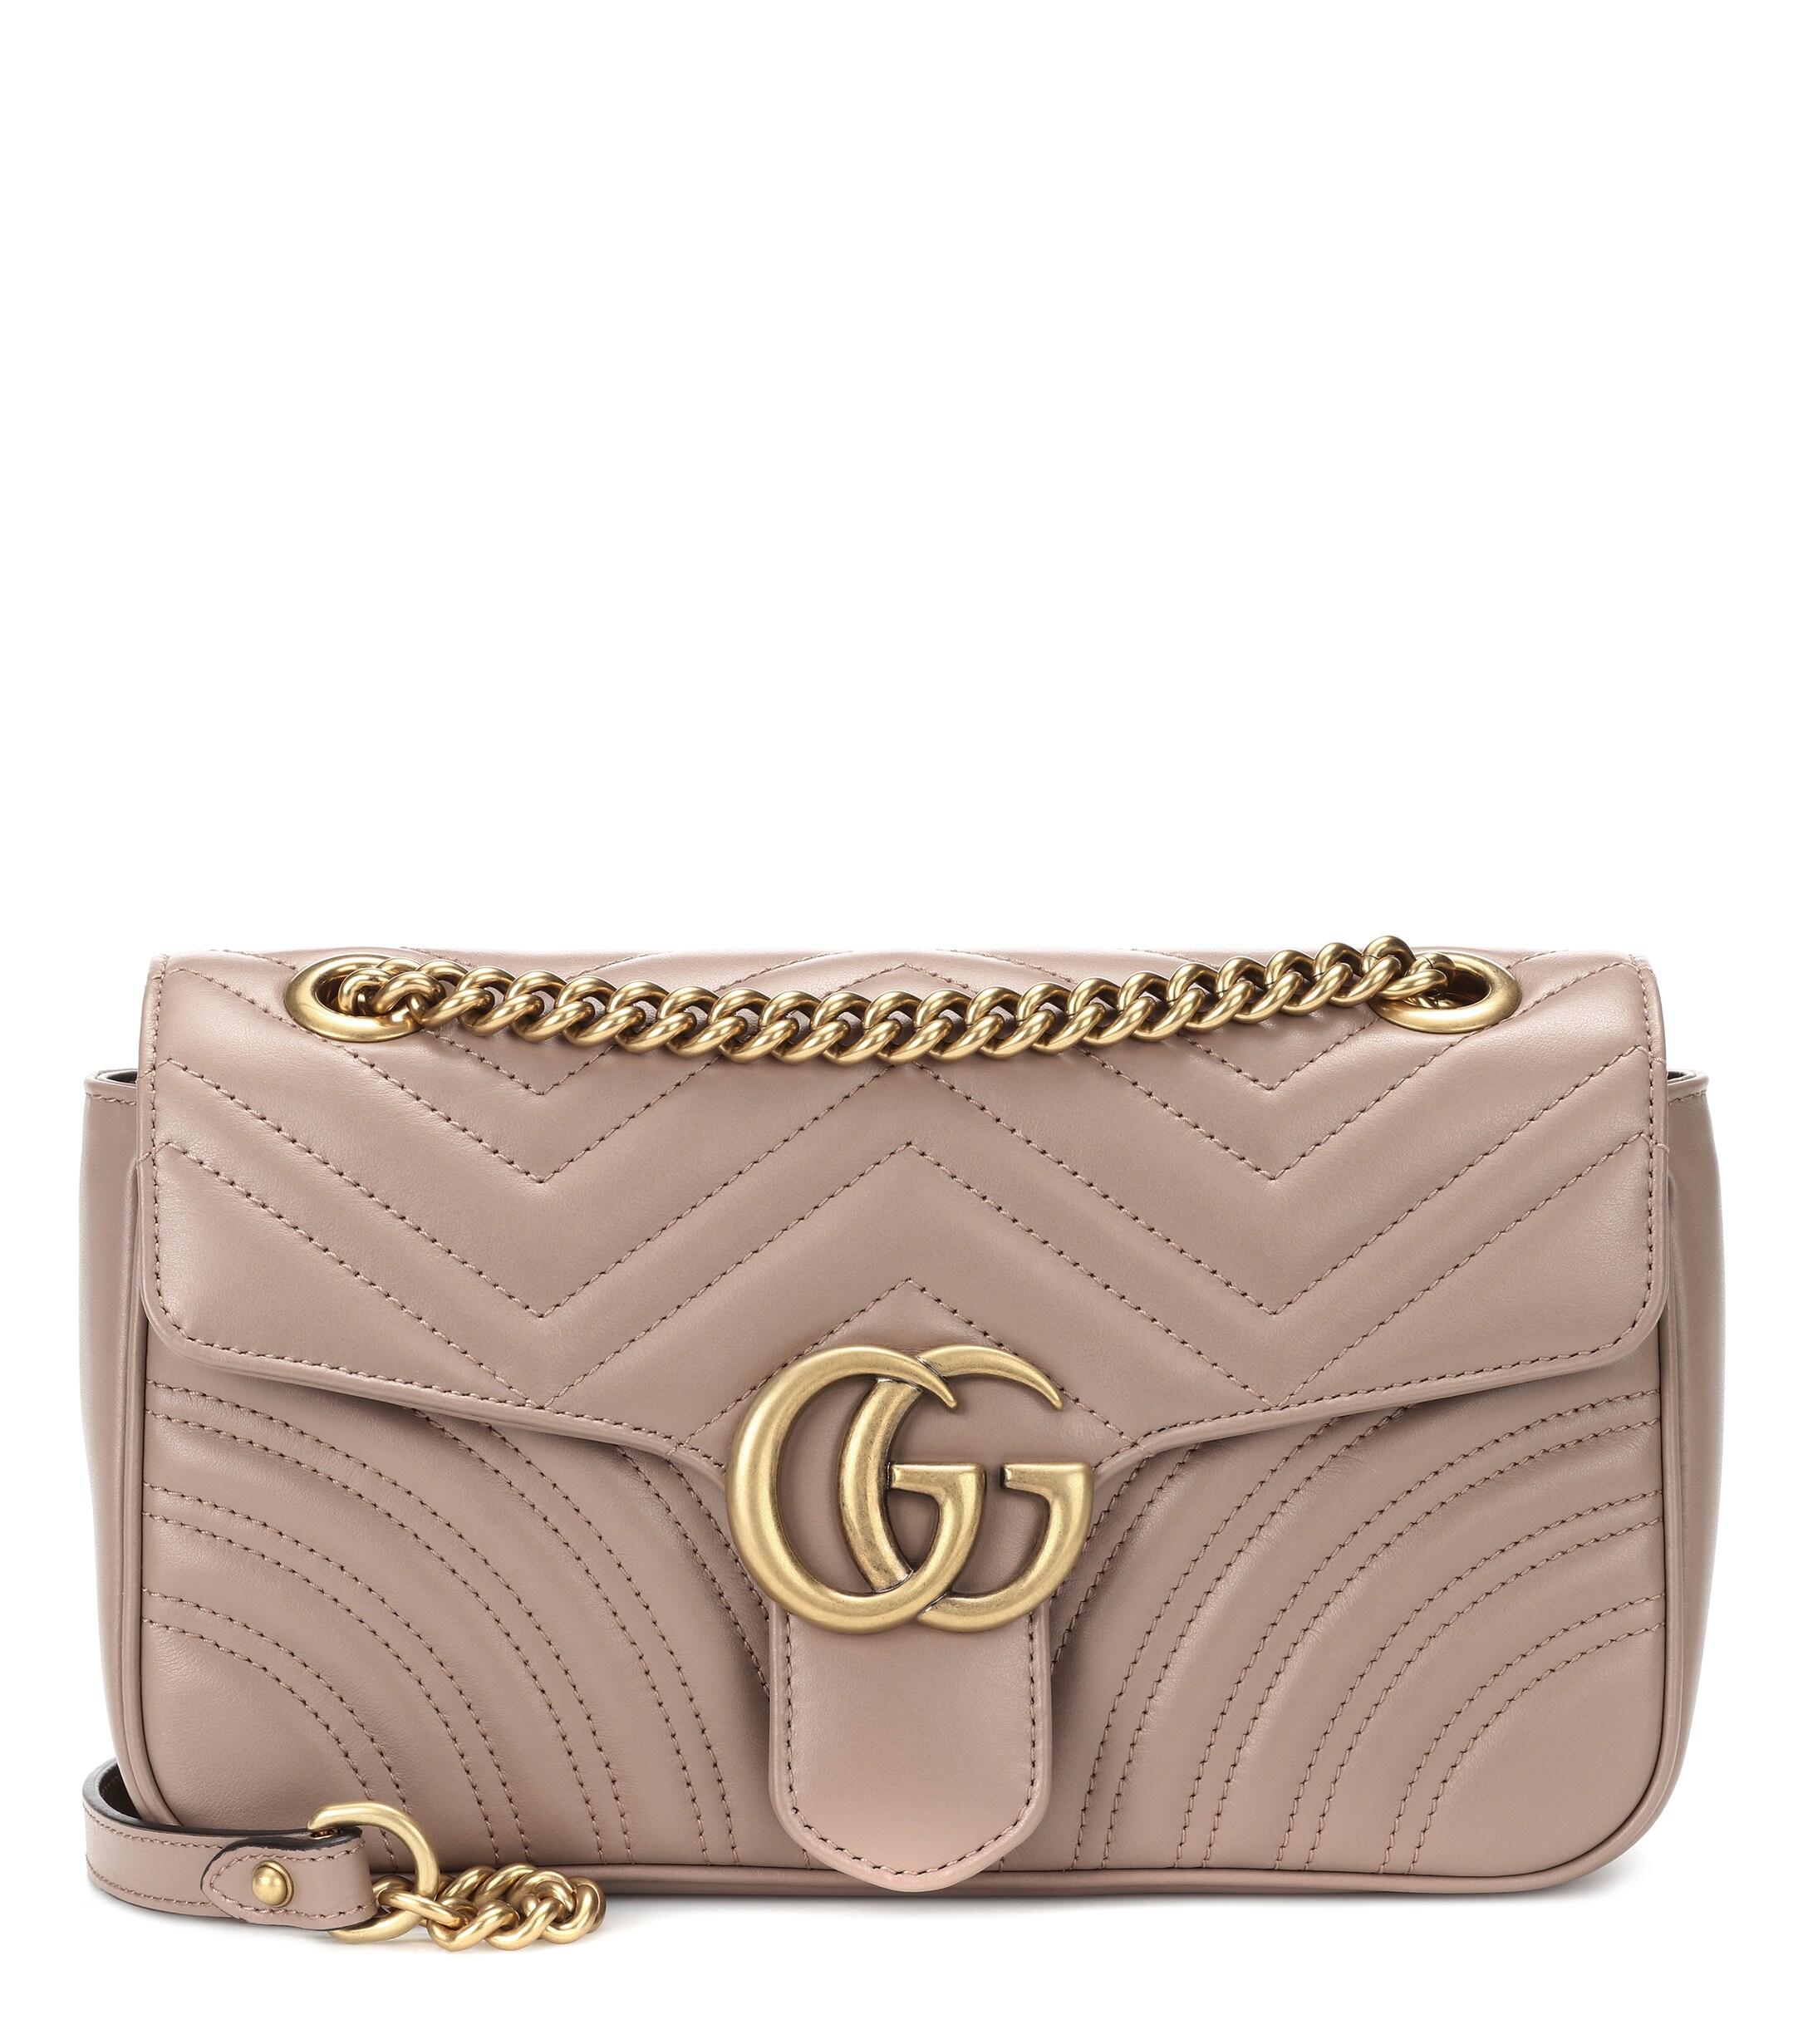 Gucci Leather GG Marmont Matelassé Shoulder Bag in Beige (Pink) - Save 26%  | Lyst